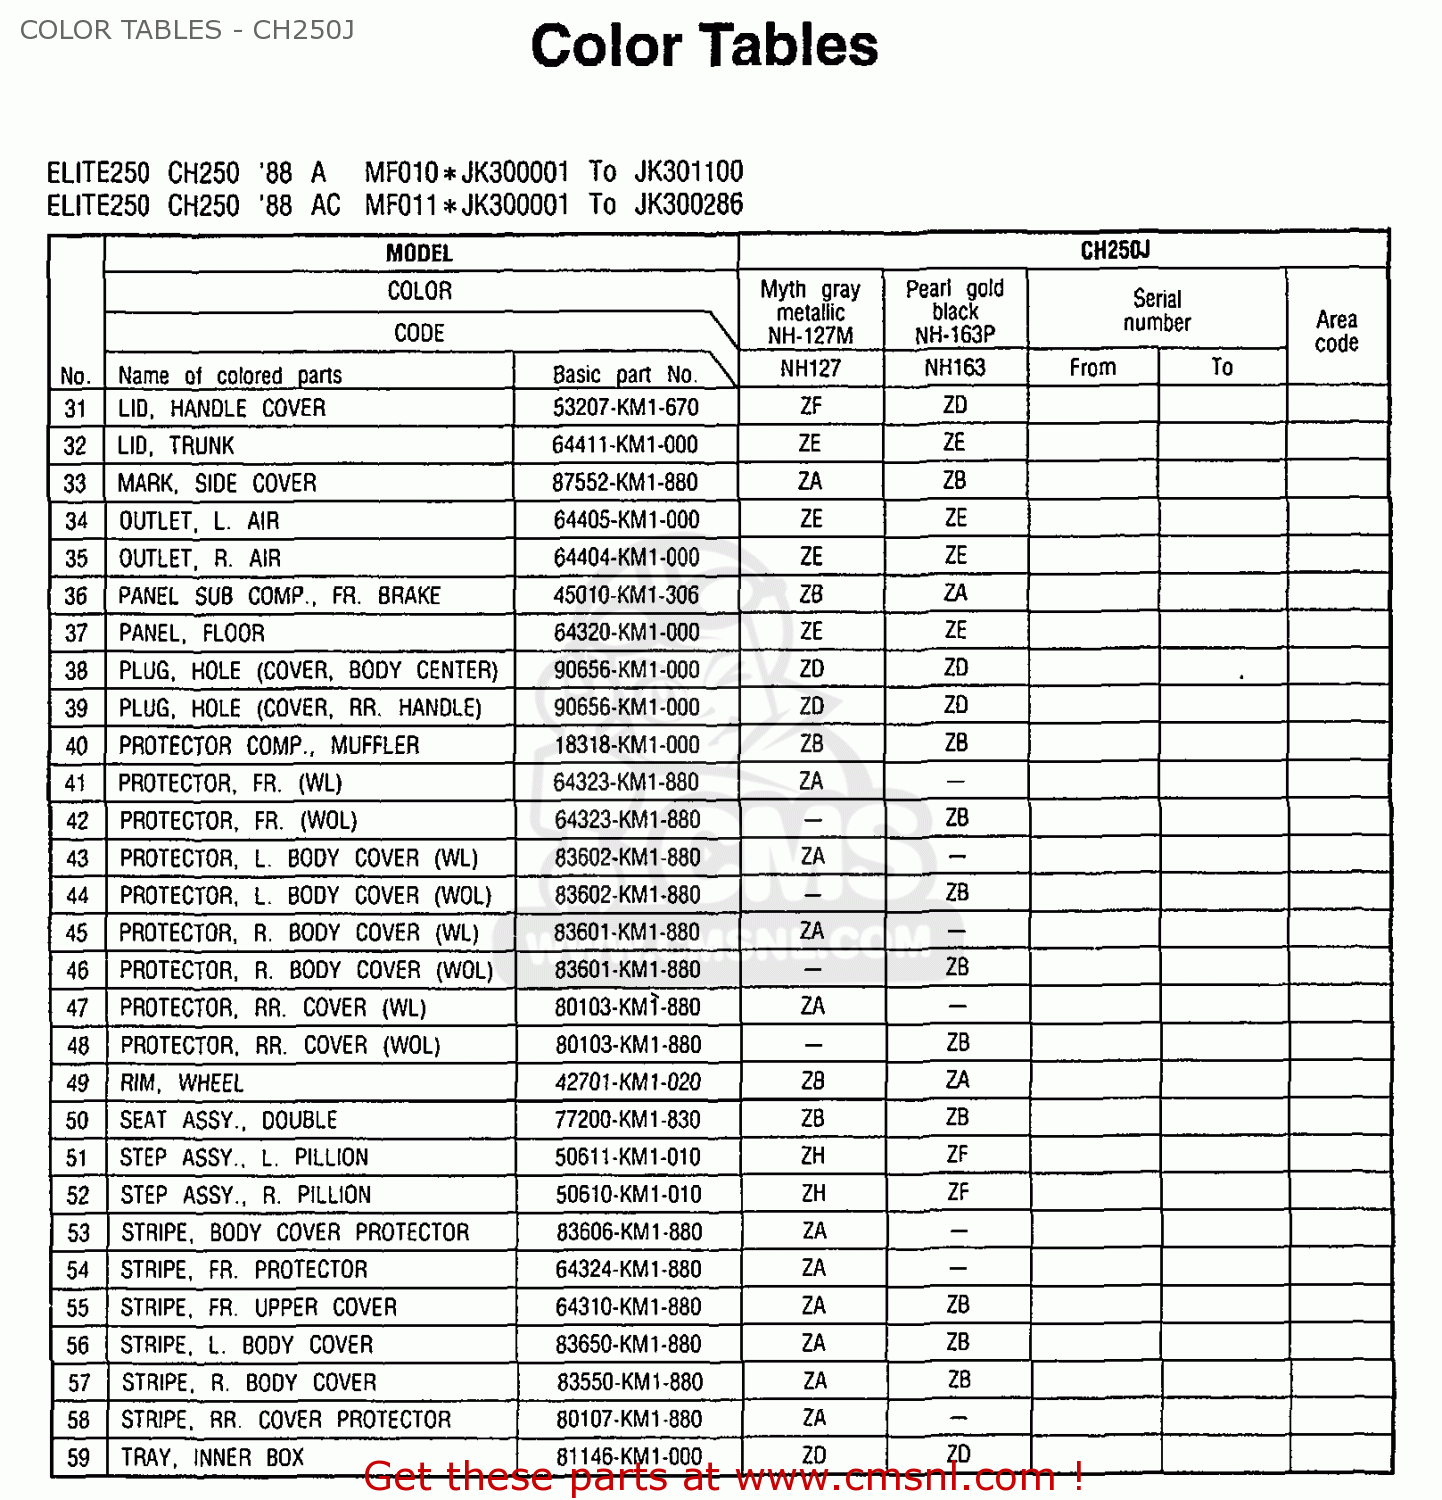 Honda CH250 ELITE 250 1987 (H) USA COLOR TABLES - CH250J - buy COLOR ...